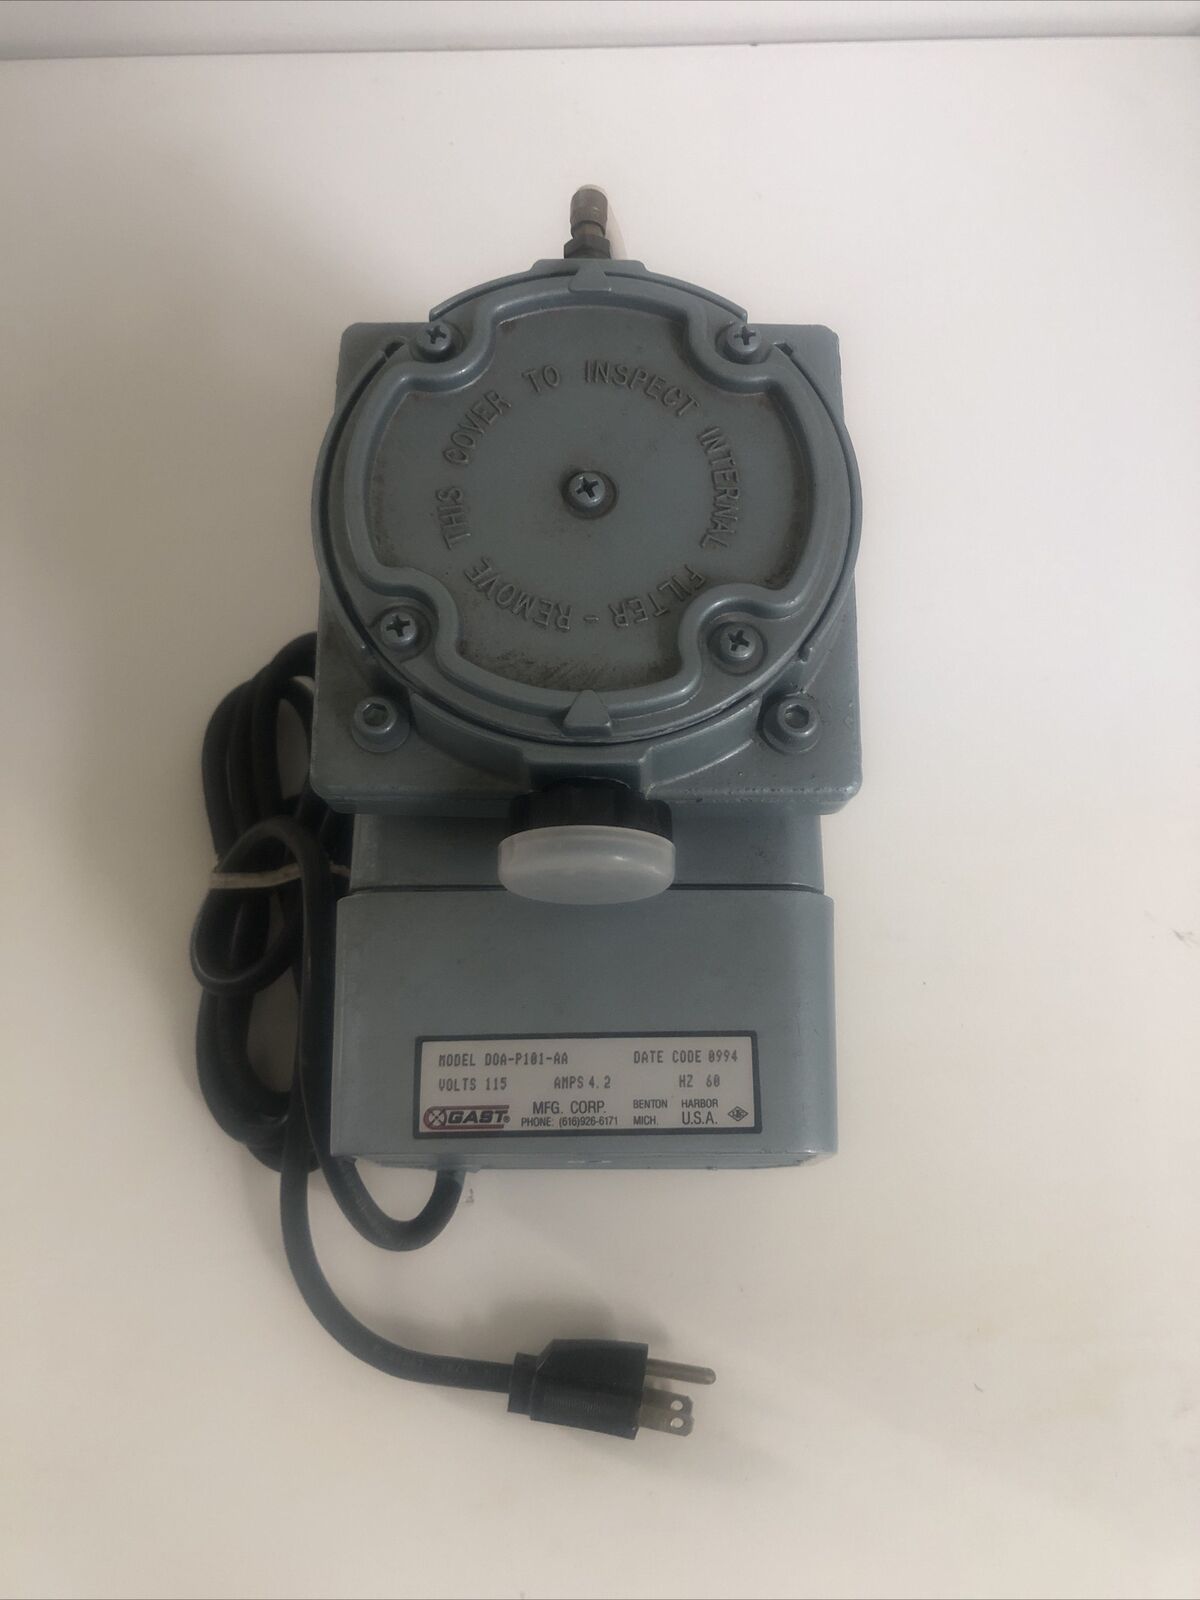 Vacuum Pump Gast / High-Capacity / Gast DOA-P101-AA  Used And Works